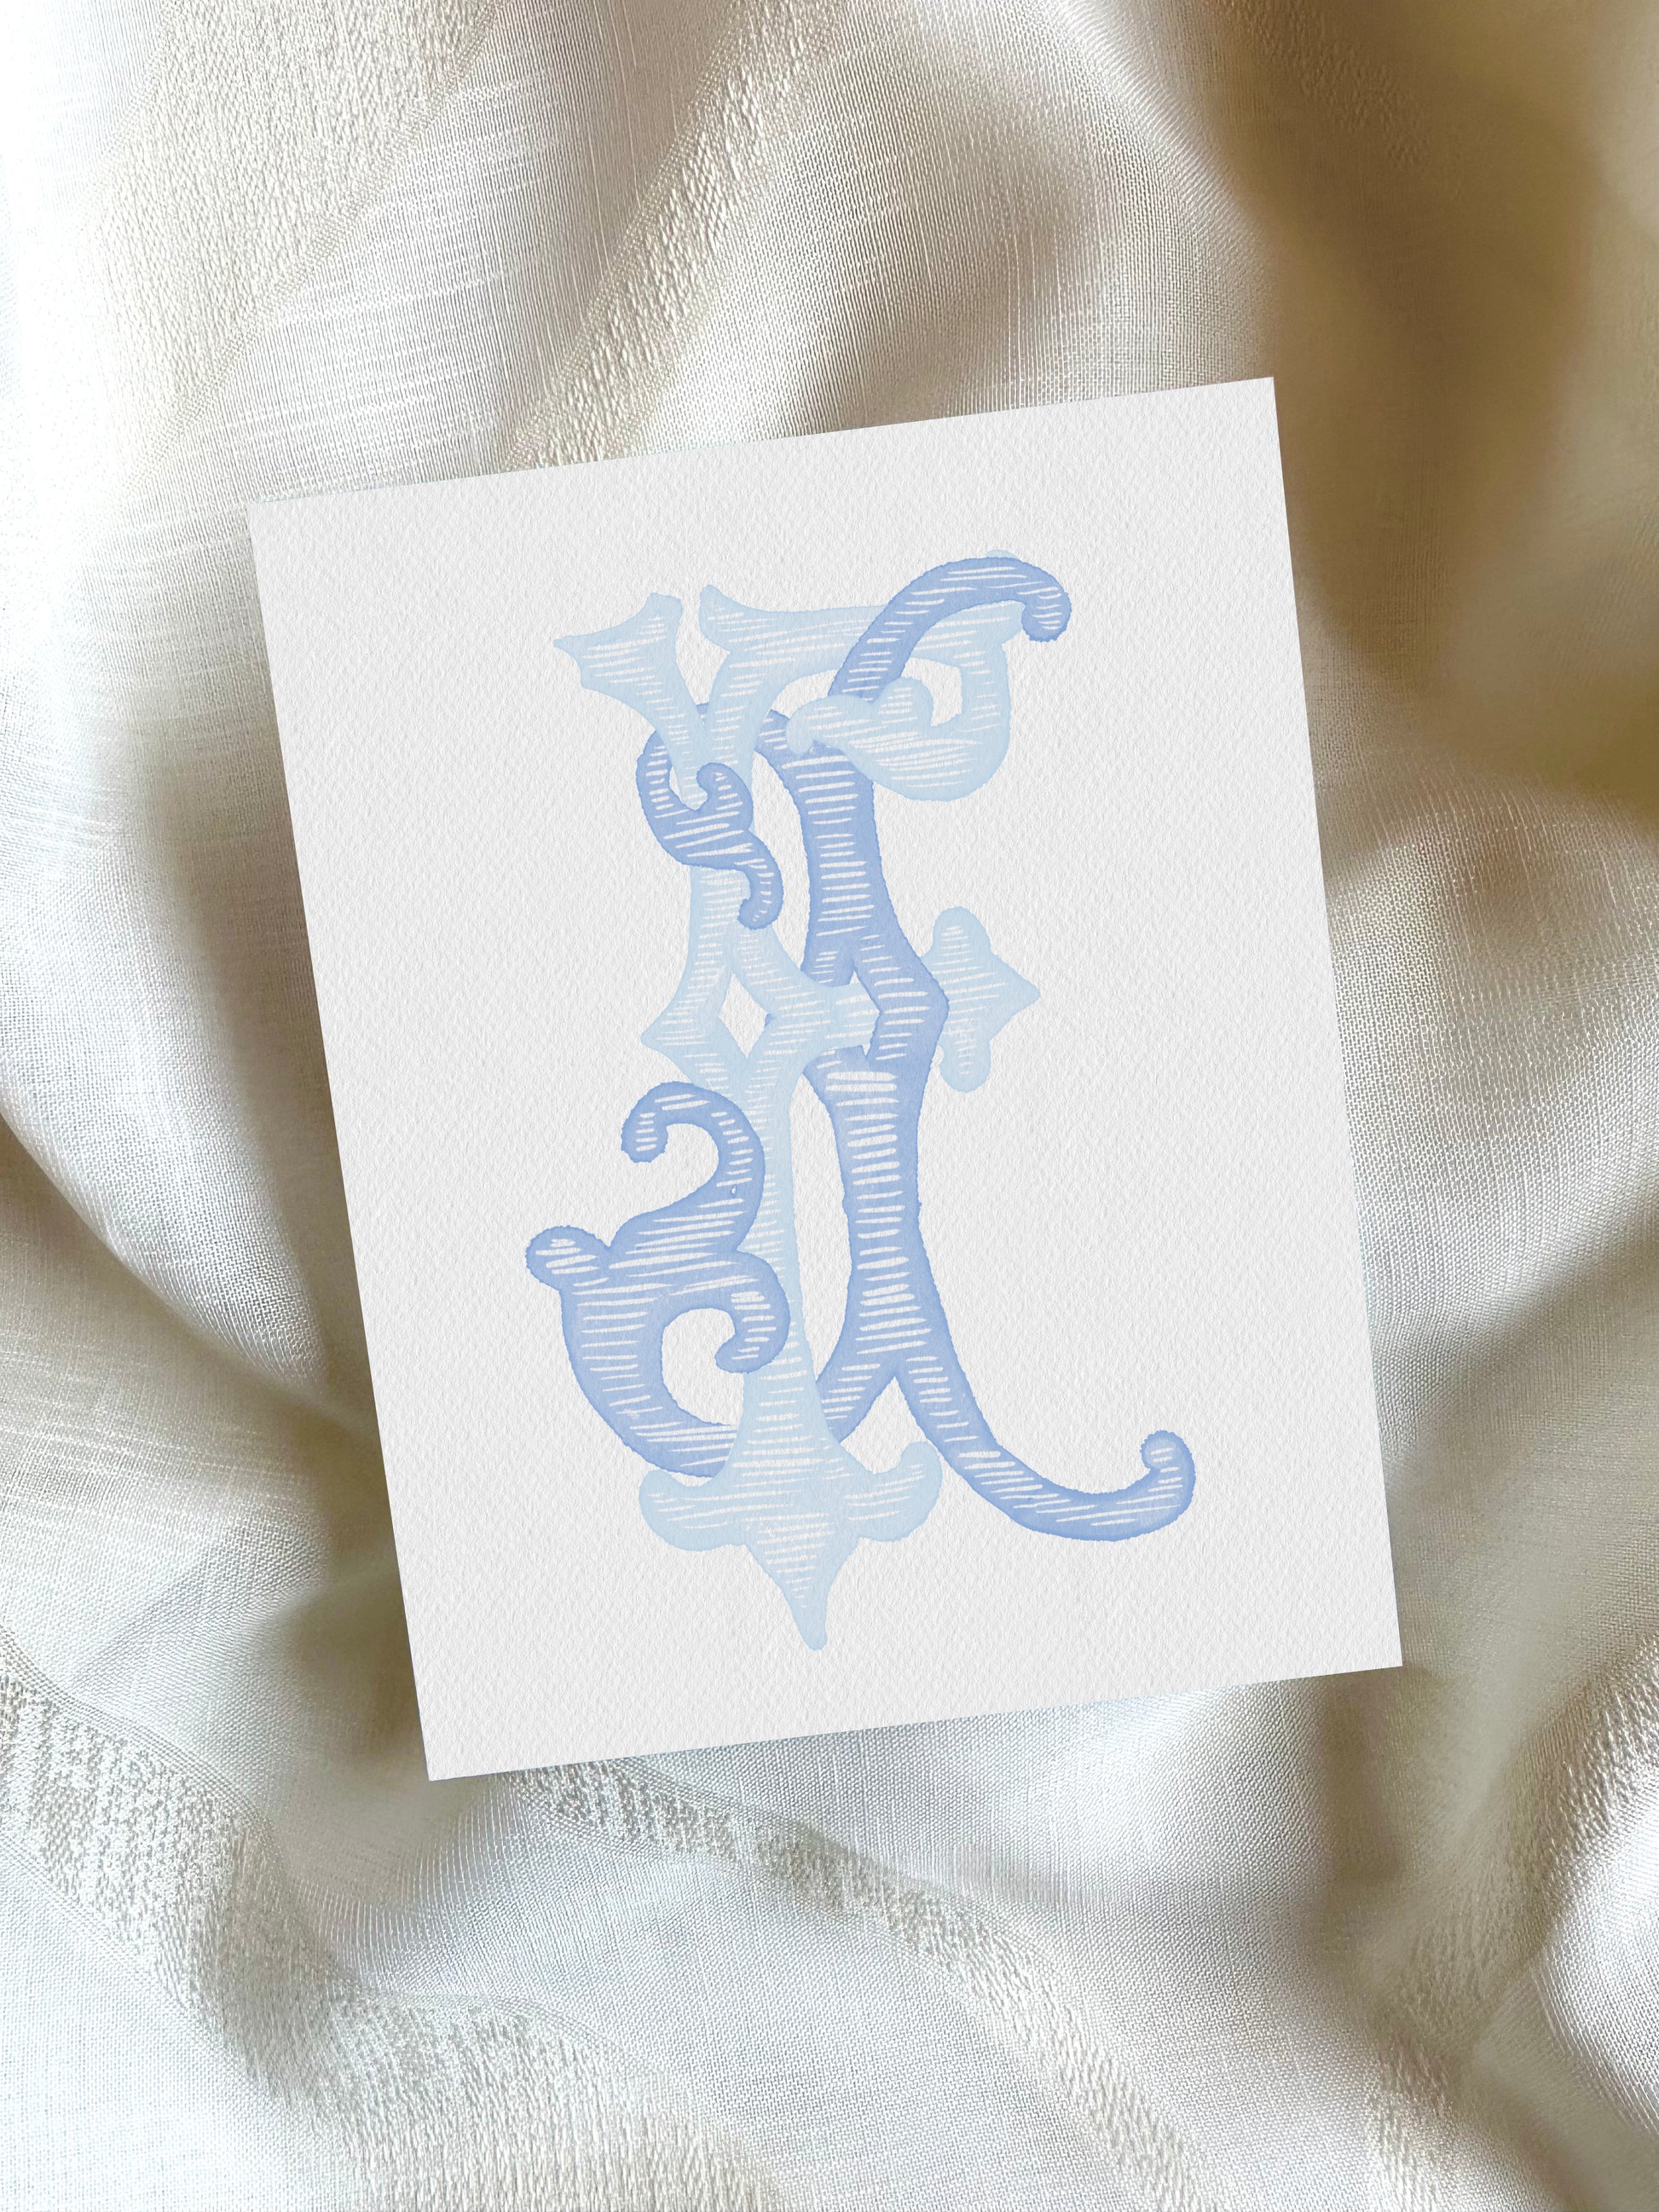 2 Letter Monogram with Letters FJ JF | Digital Download - Wedding Monogram SVG, Personal Logo, Wedding Logo for Wedding Invitations The Wedding Crest Lab